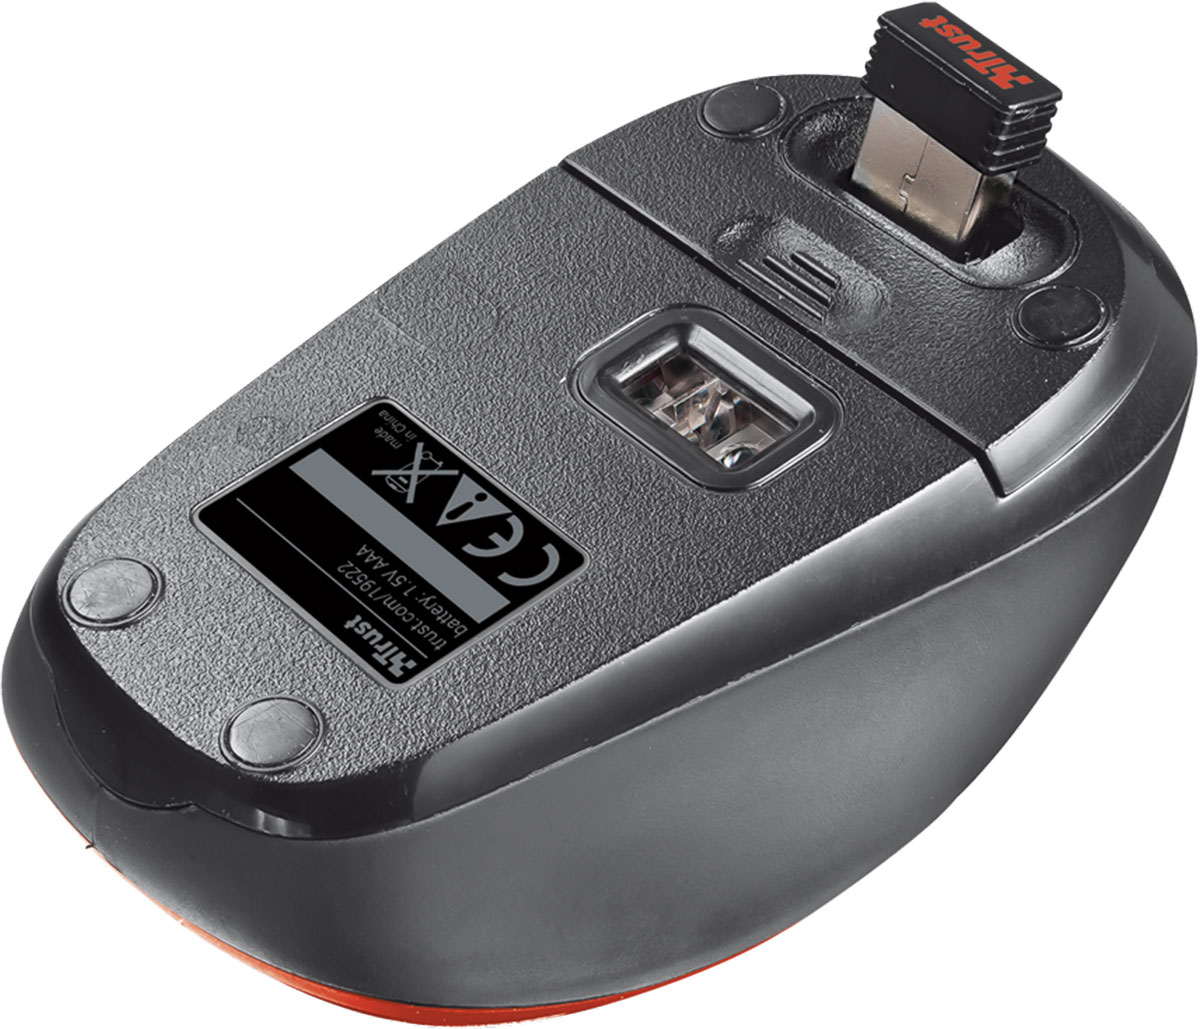 Trust Yvi Wireless Mouse, Black Red 